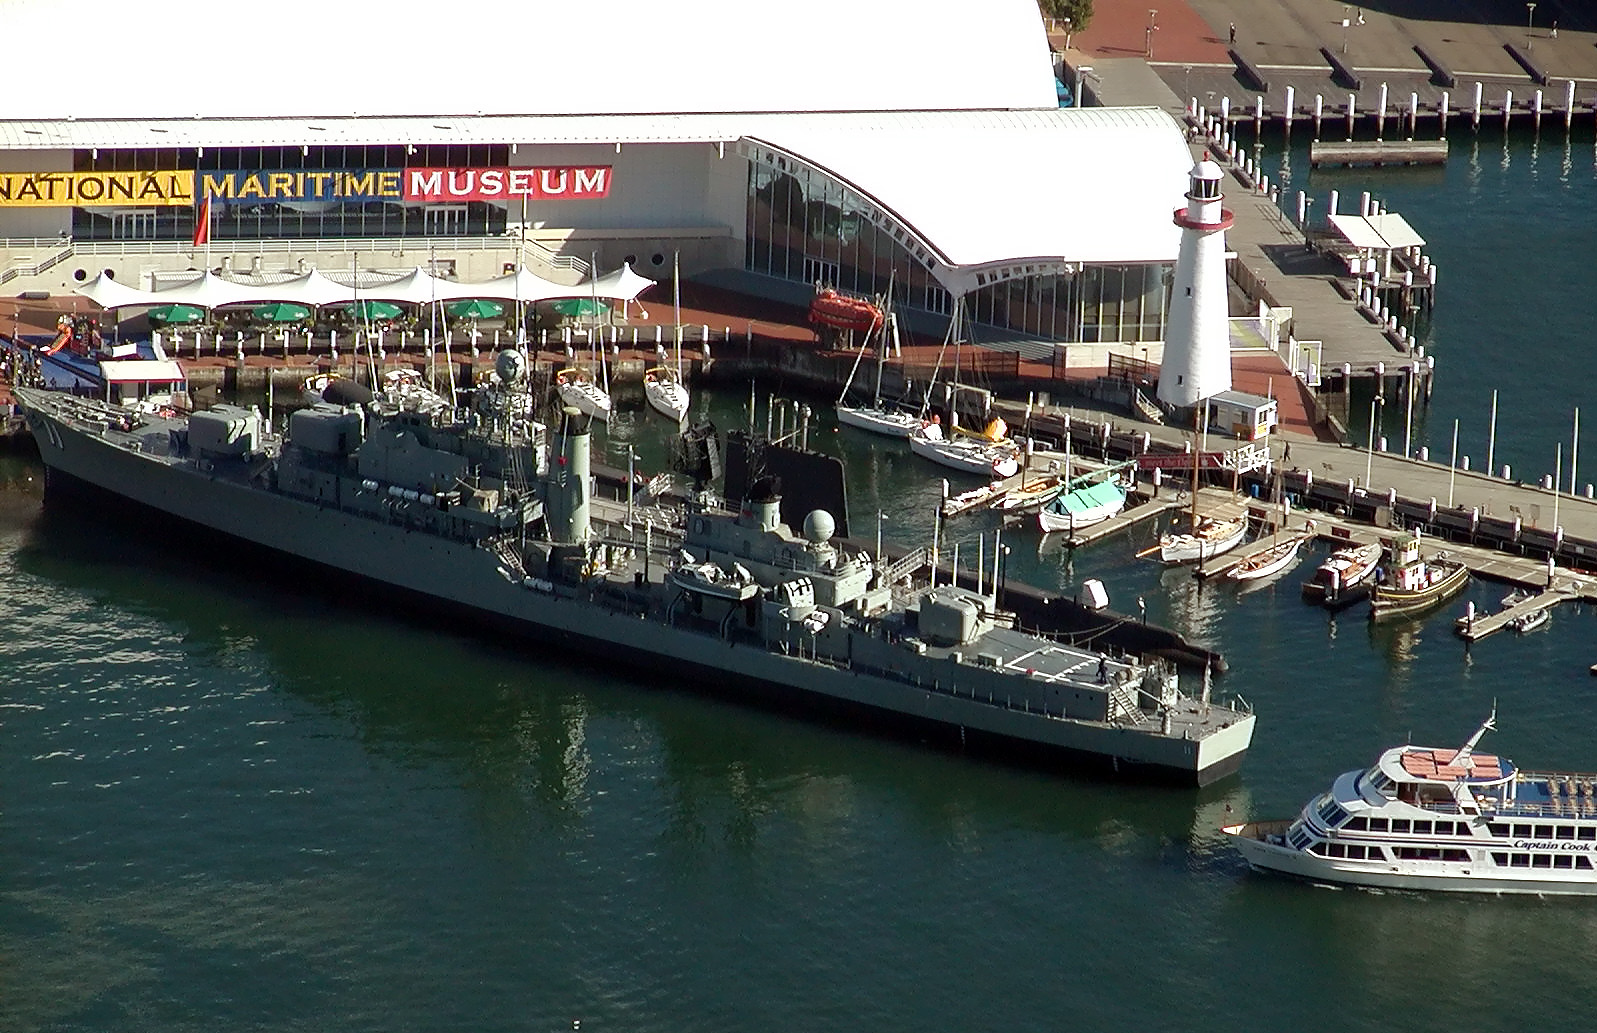 20-Jun-2001 10:22 - Sydney - Navy ship, part of the Maritime Museum 